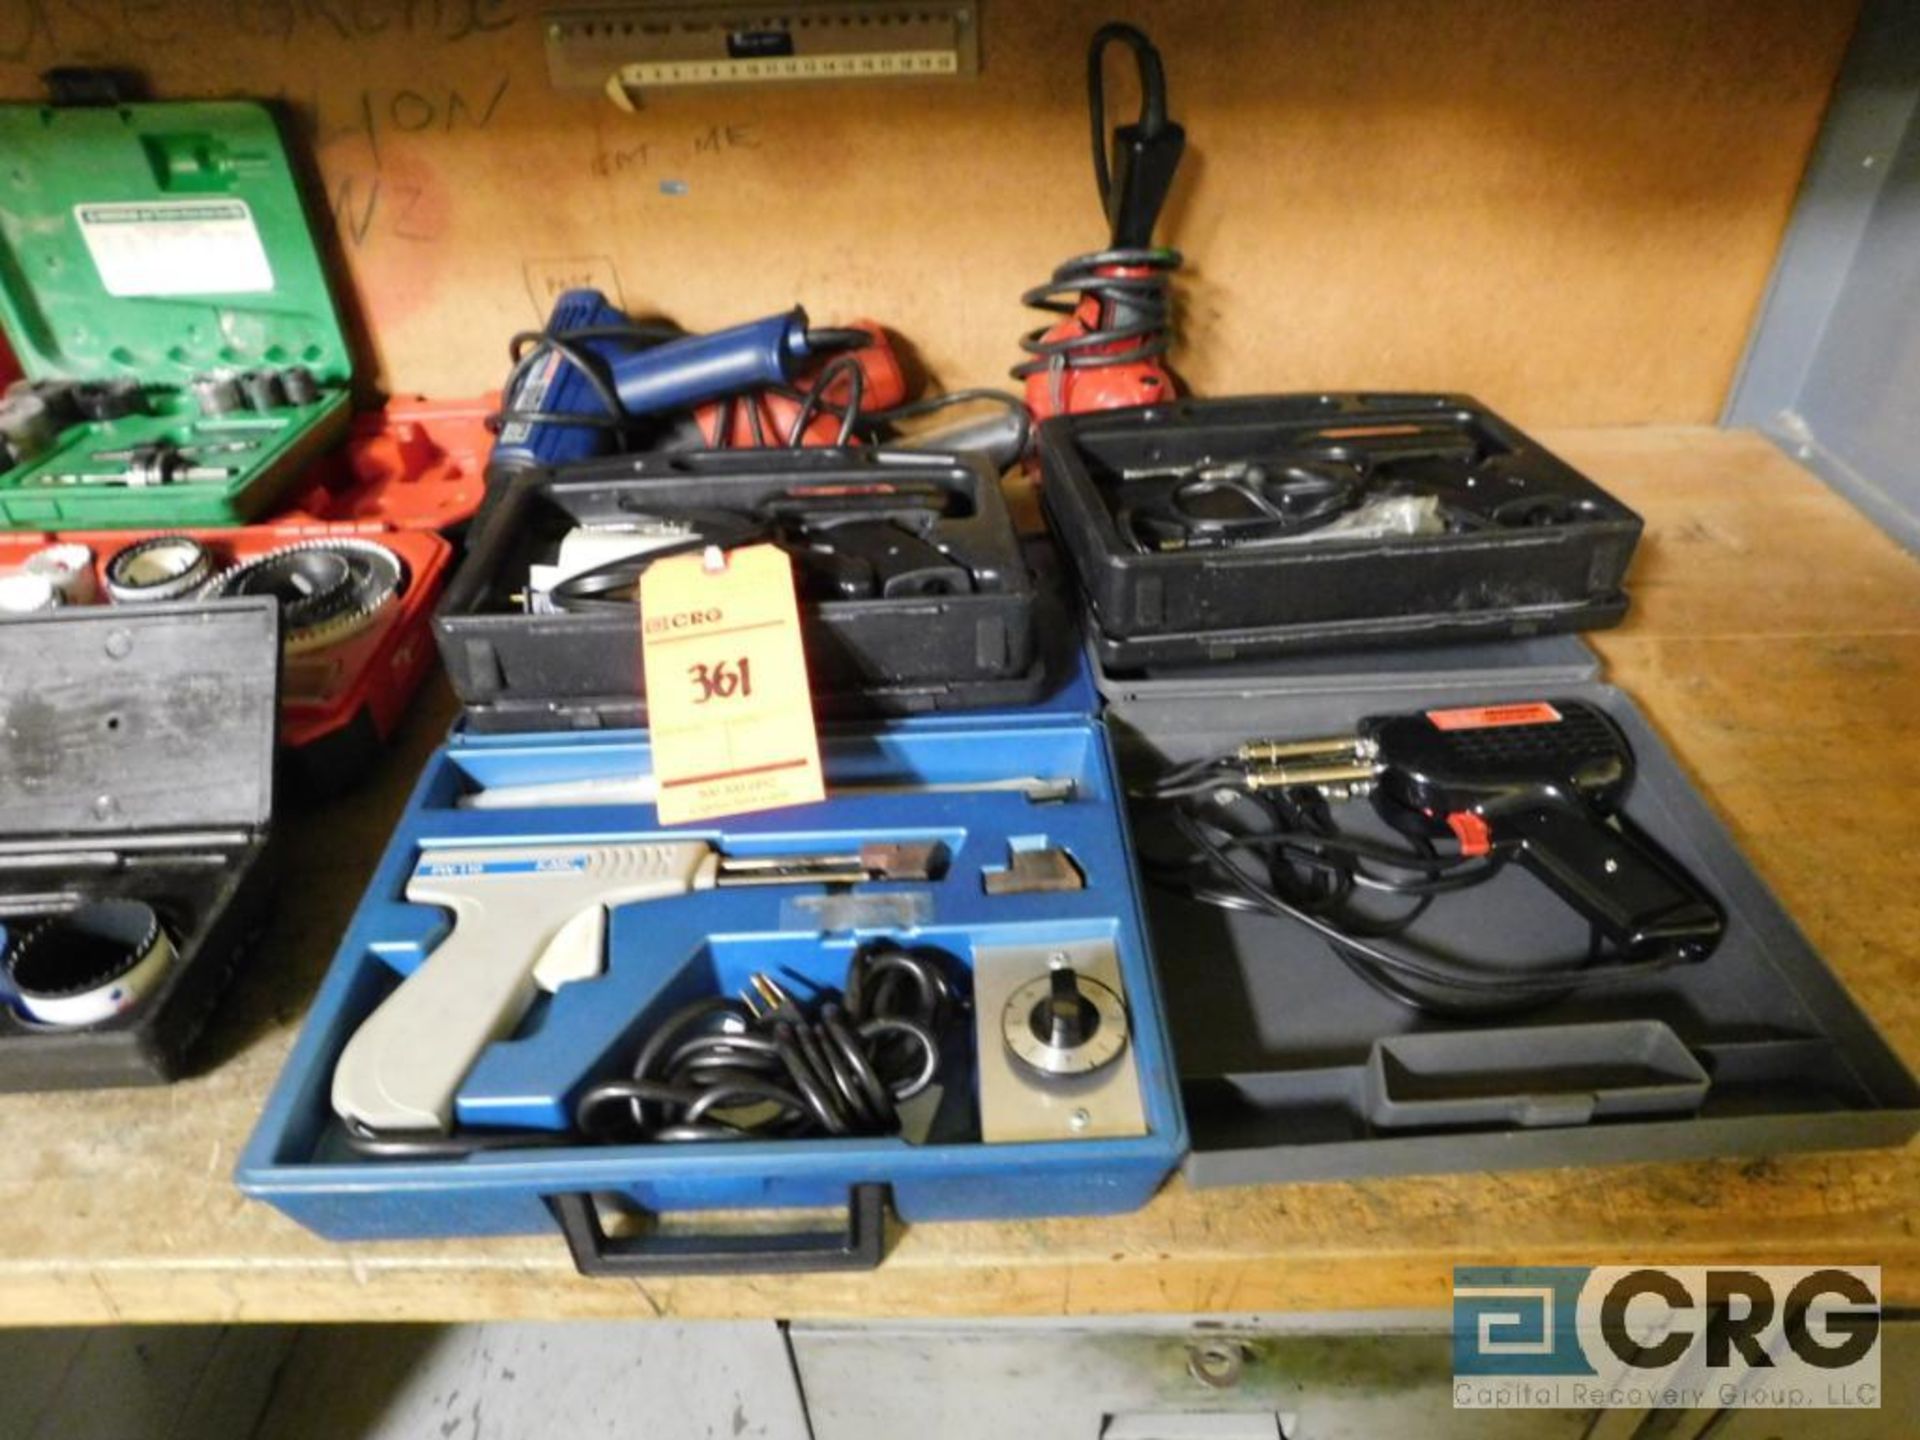 Miscellaneous tooling heat gun, hole saw, hand saw, soldering gun